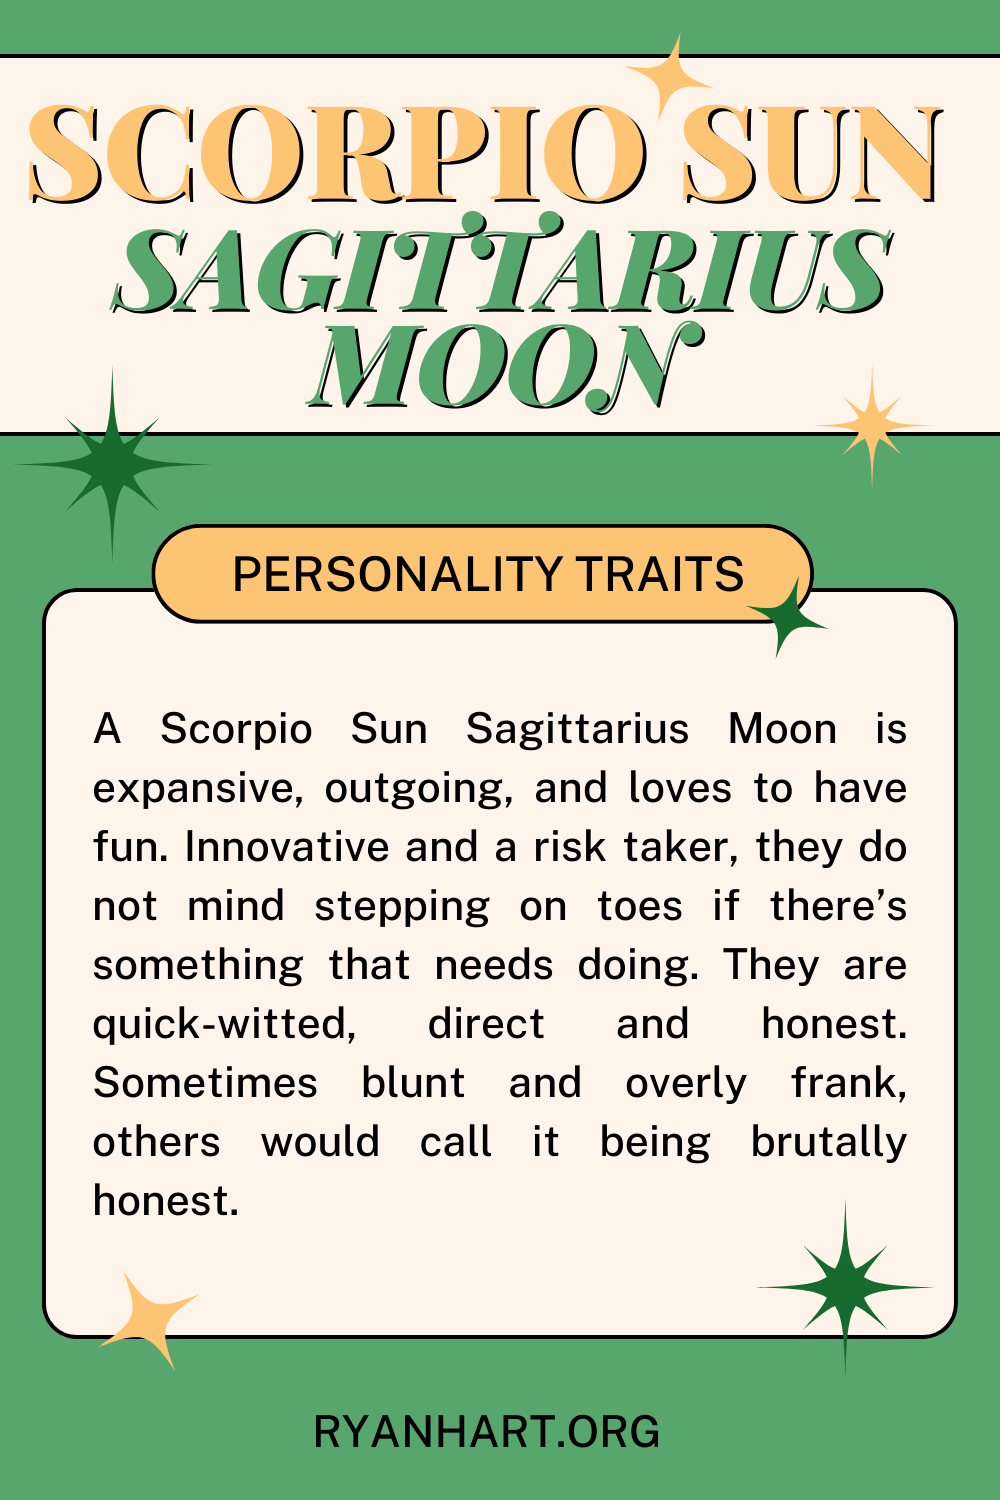 Scorpio Sun Sagittarius Moon Description